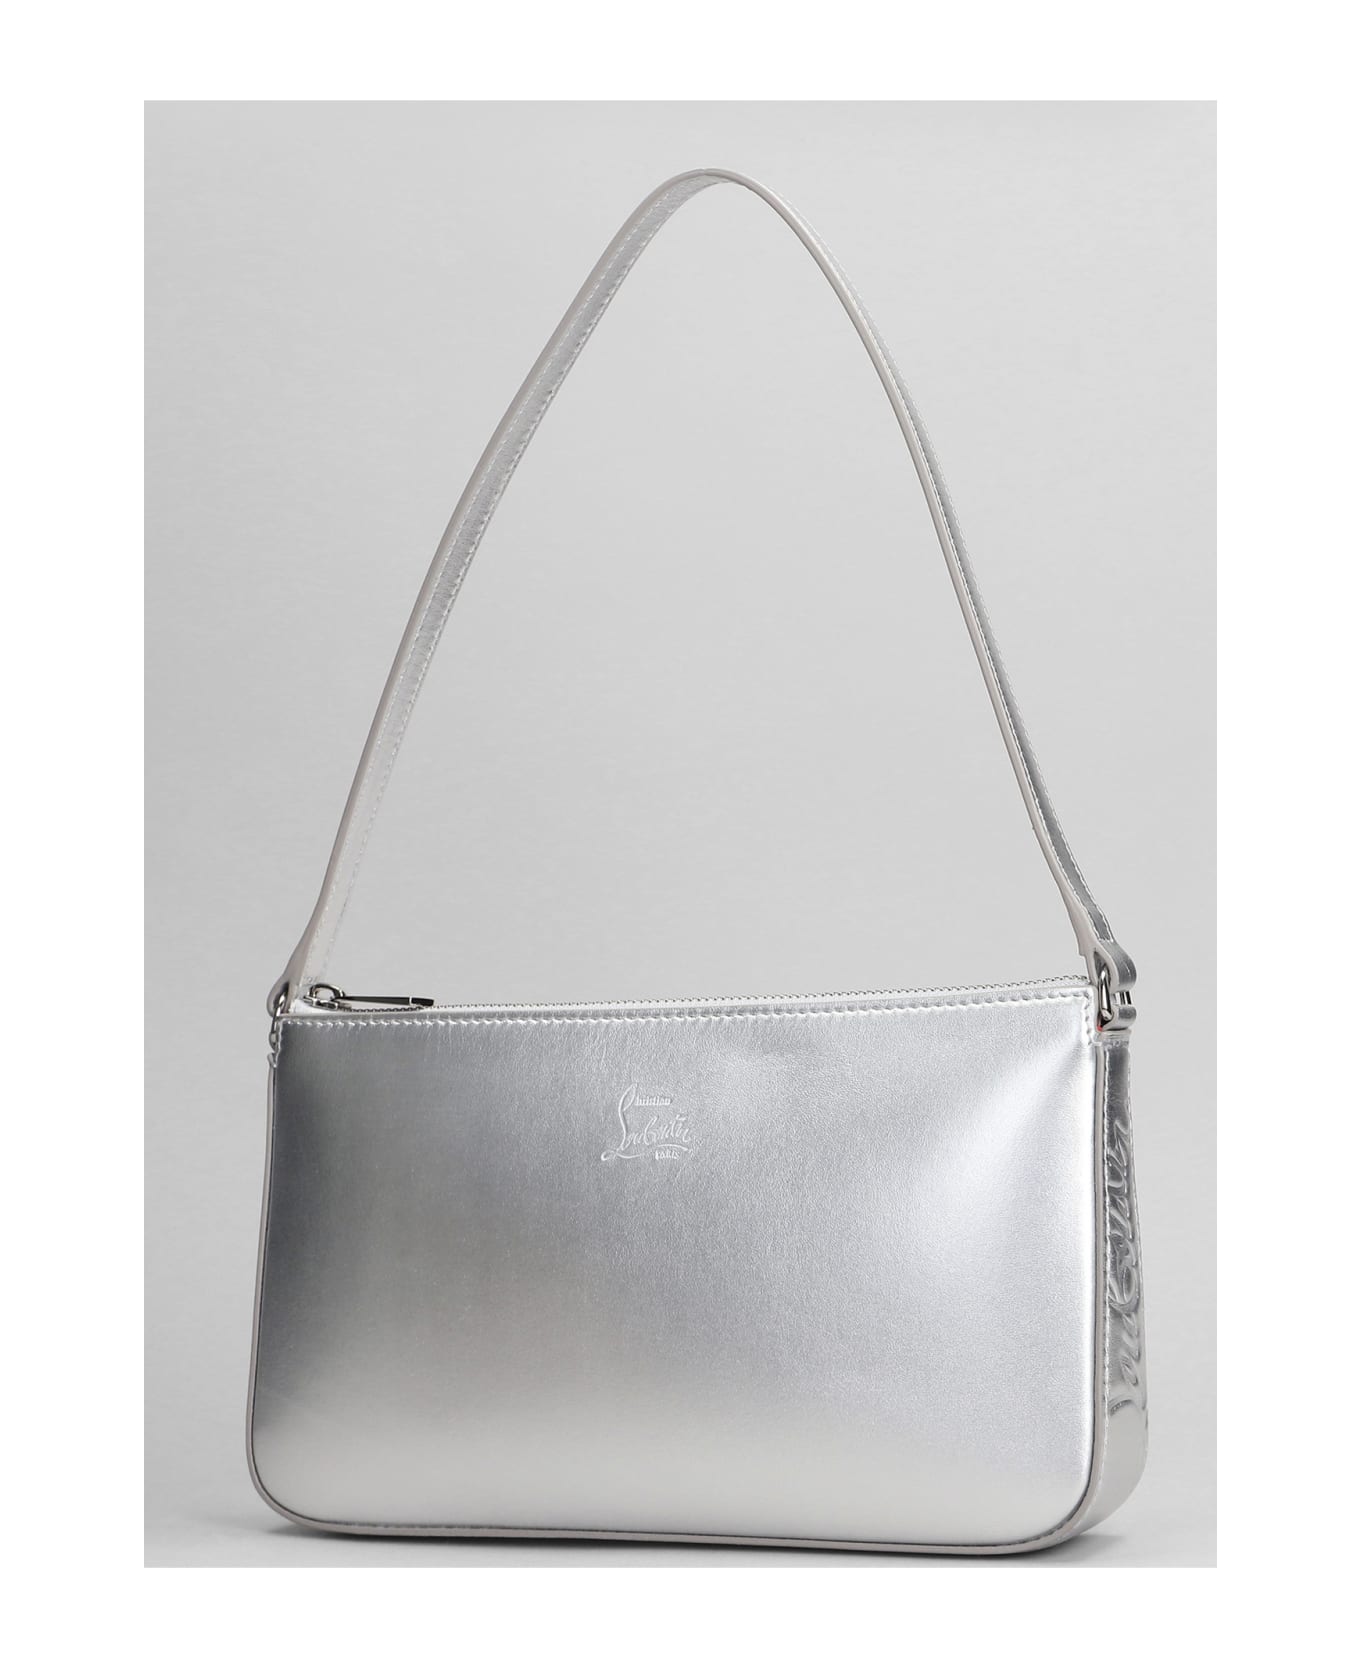 Christian Louboutin Loubila Shoulder Bag In Silver Leather - silver